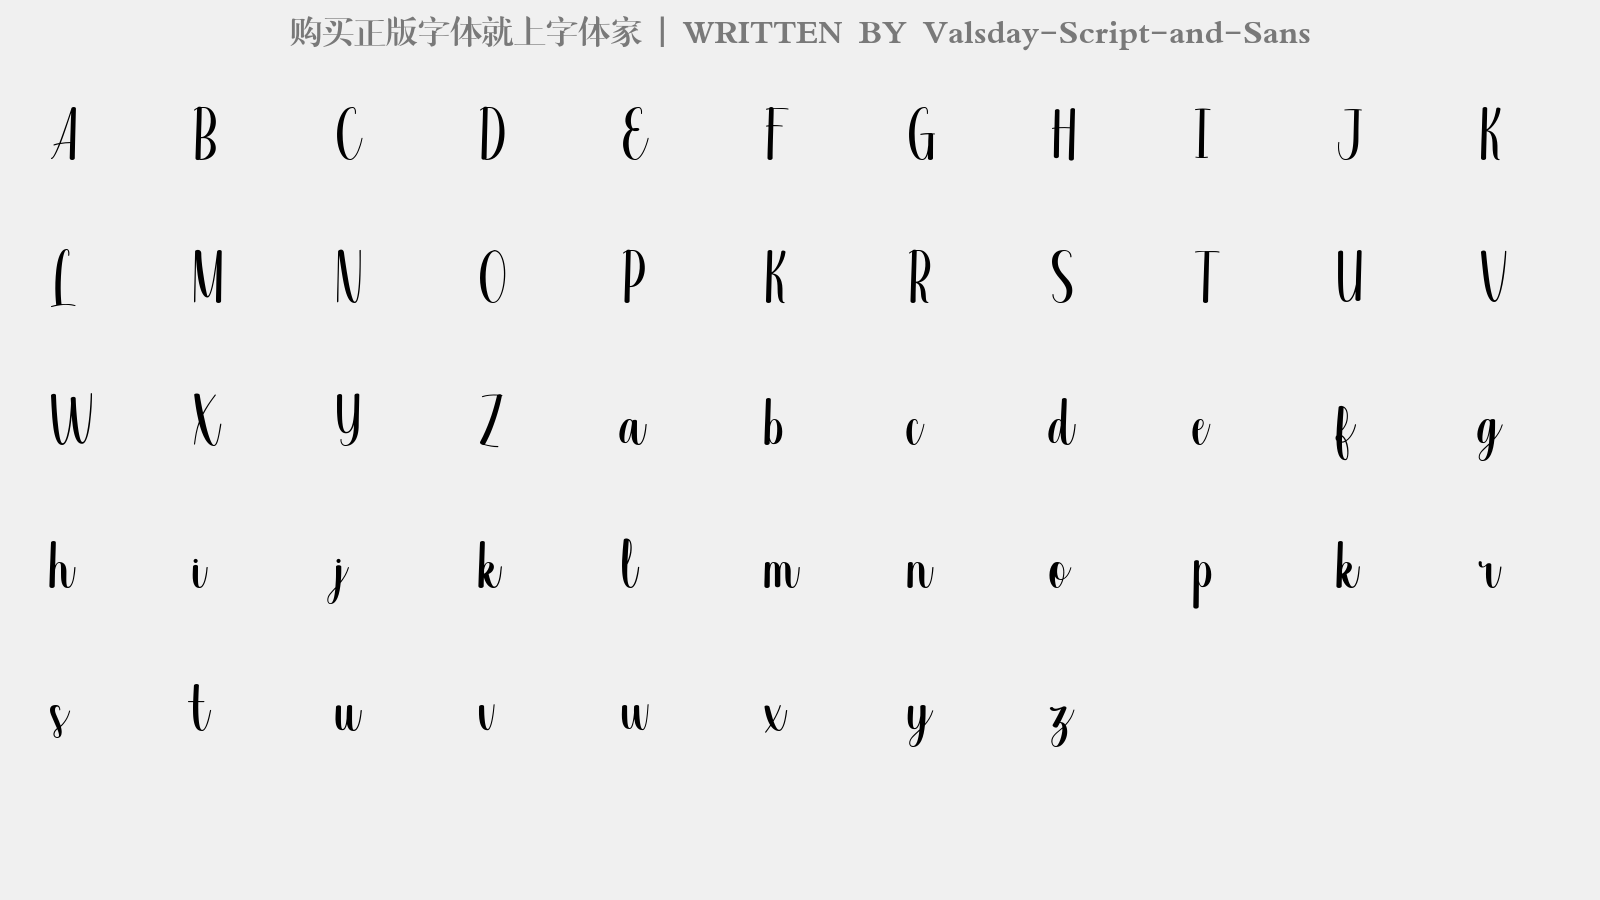 Valsday-Script-and-Sans - 大写字母/小写字母/数字